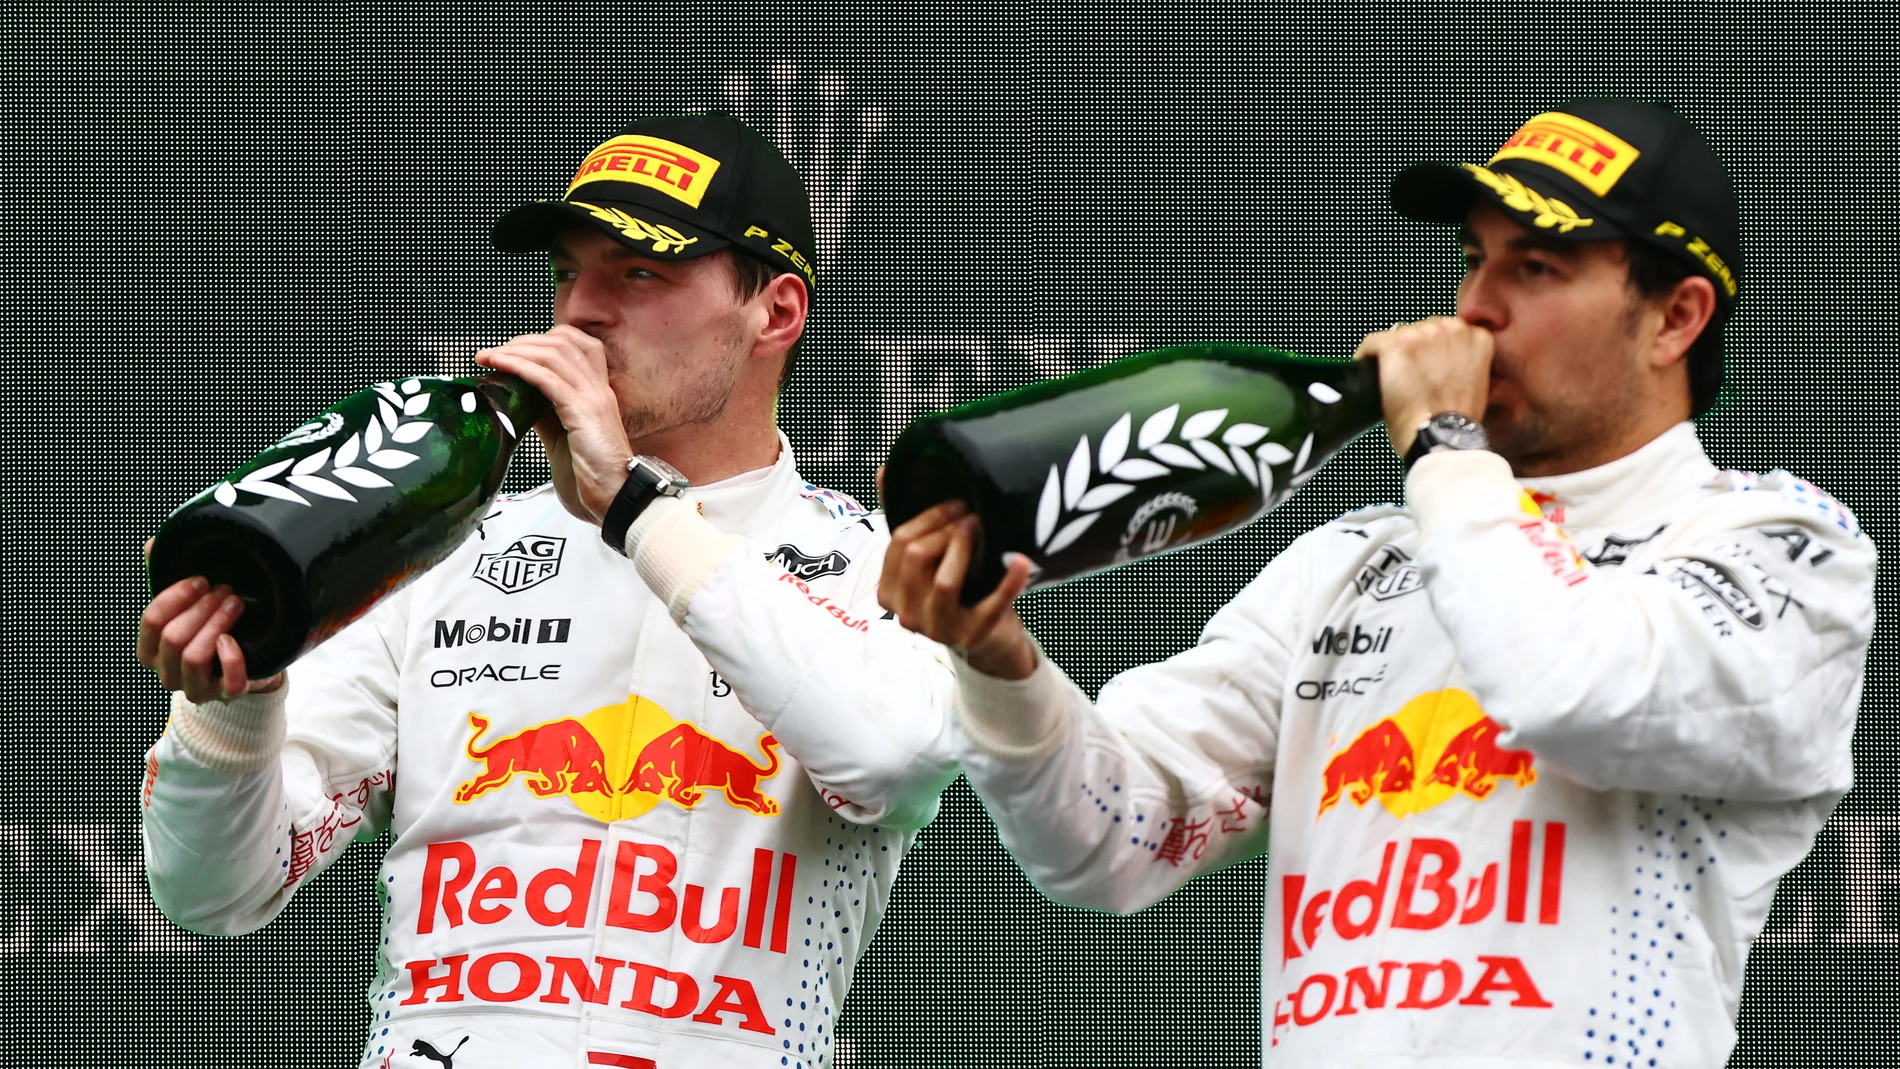 Max Verstappen y Sergio Pérez